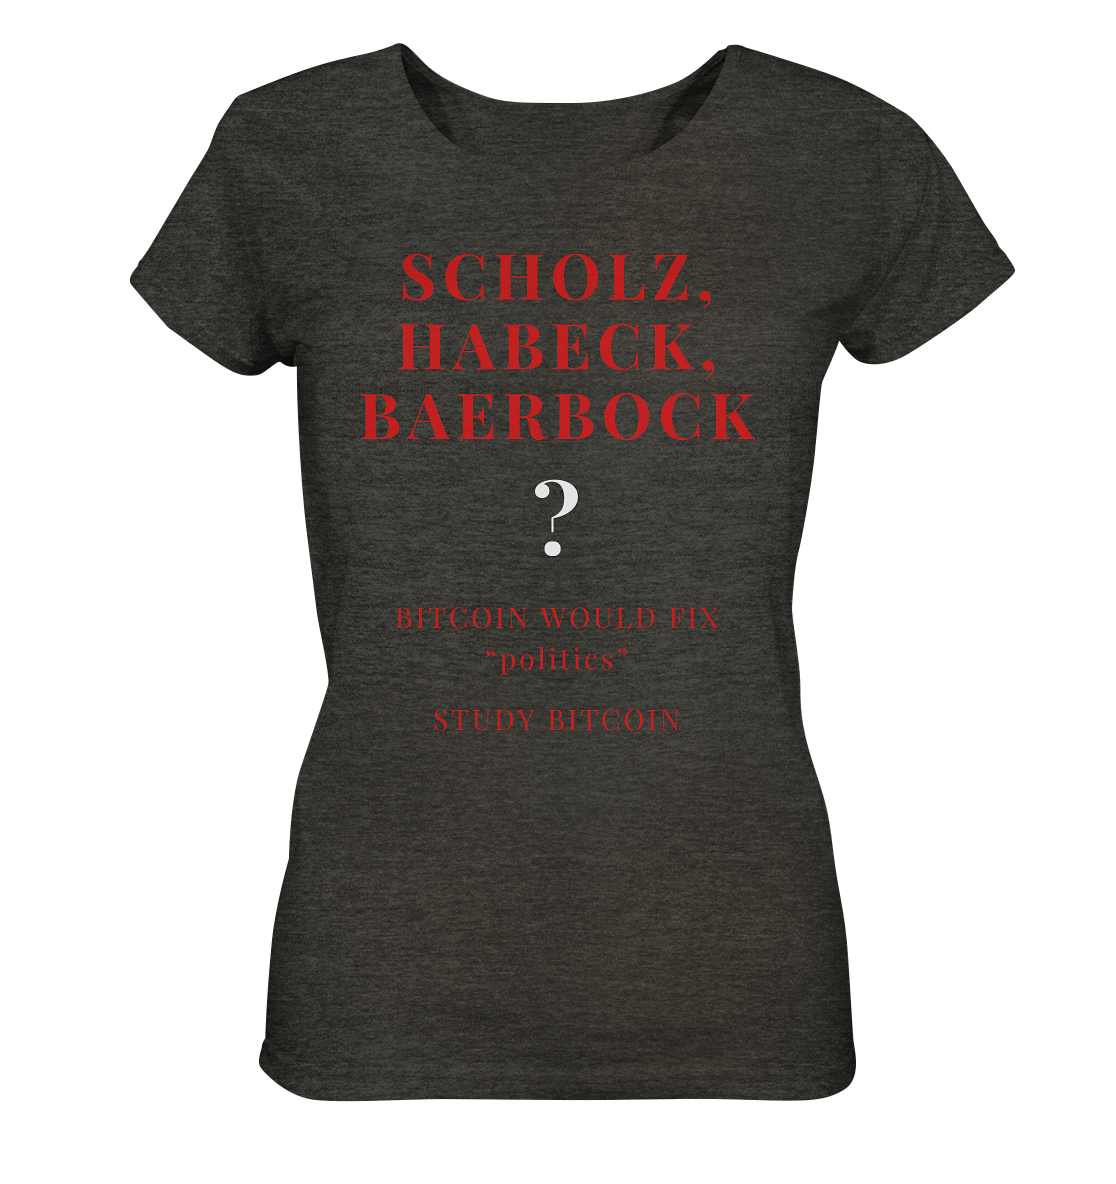 SCHOLZ, HABECK, BAERBOCK ? BITCOIN WOULD FIX "politics" - STUDY BITCOIN (Ladies Collection 21% Rabatt bis zum Halving 2024)   - Ladies Organic Shirt (meliert)